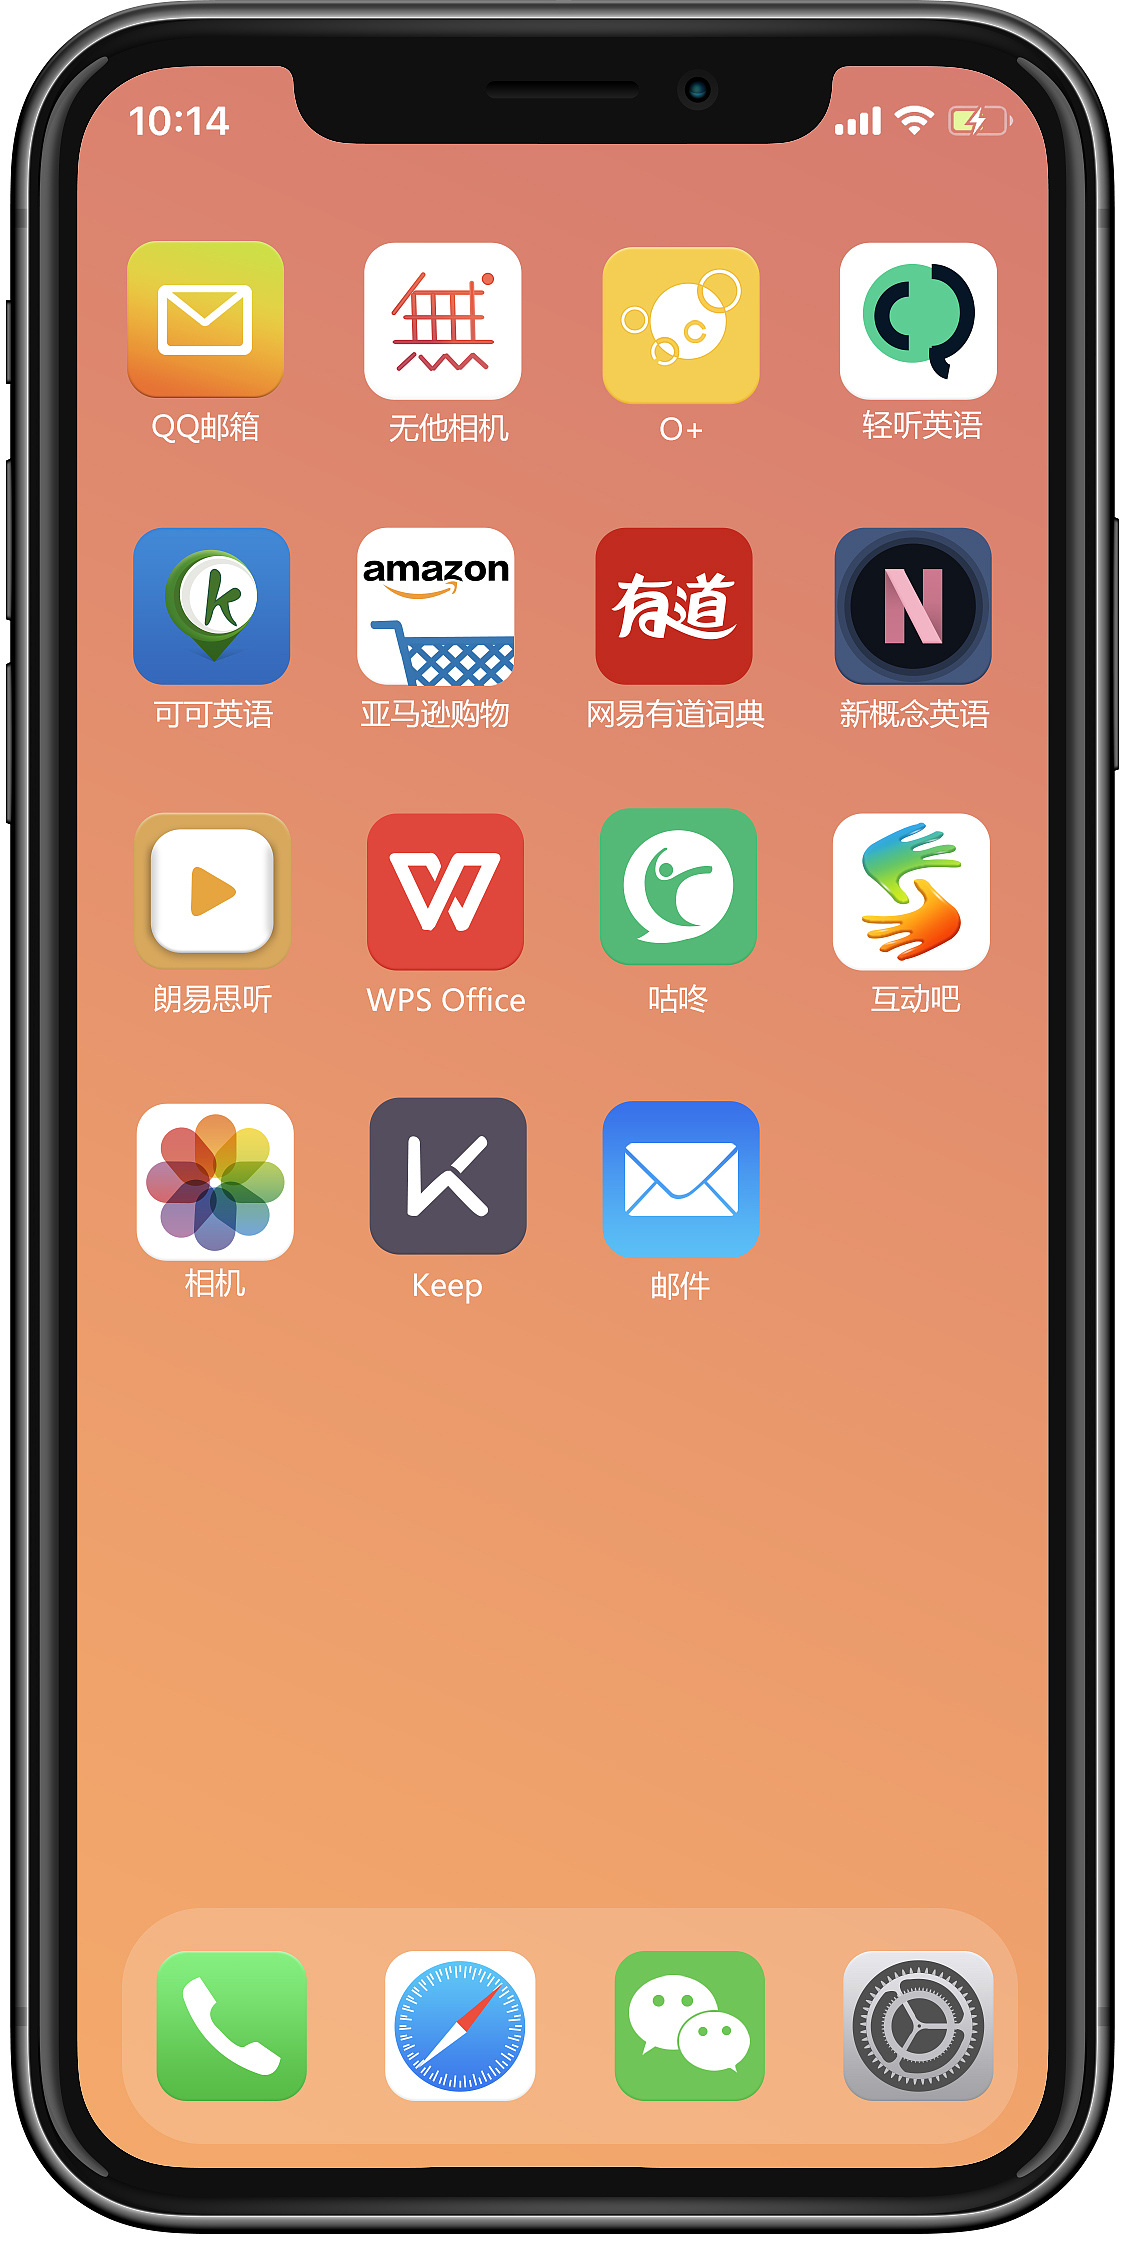 iOS 手机连接代理 没有网络！ - IOS - 开源软件问题中文版 - 编程技术网 - 手机版